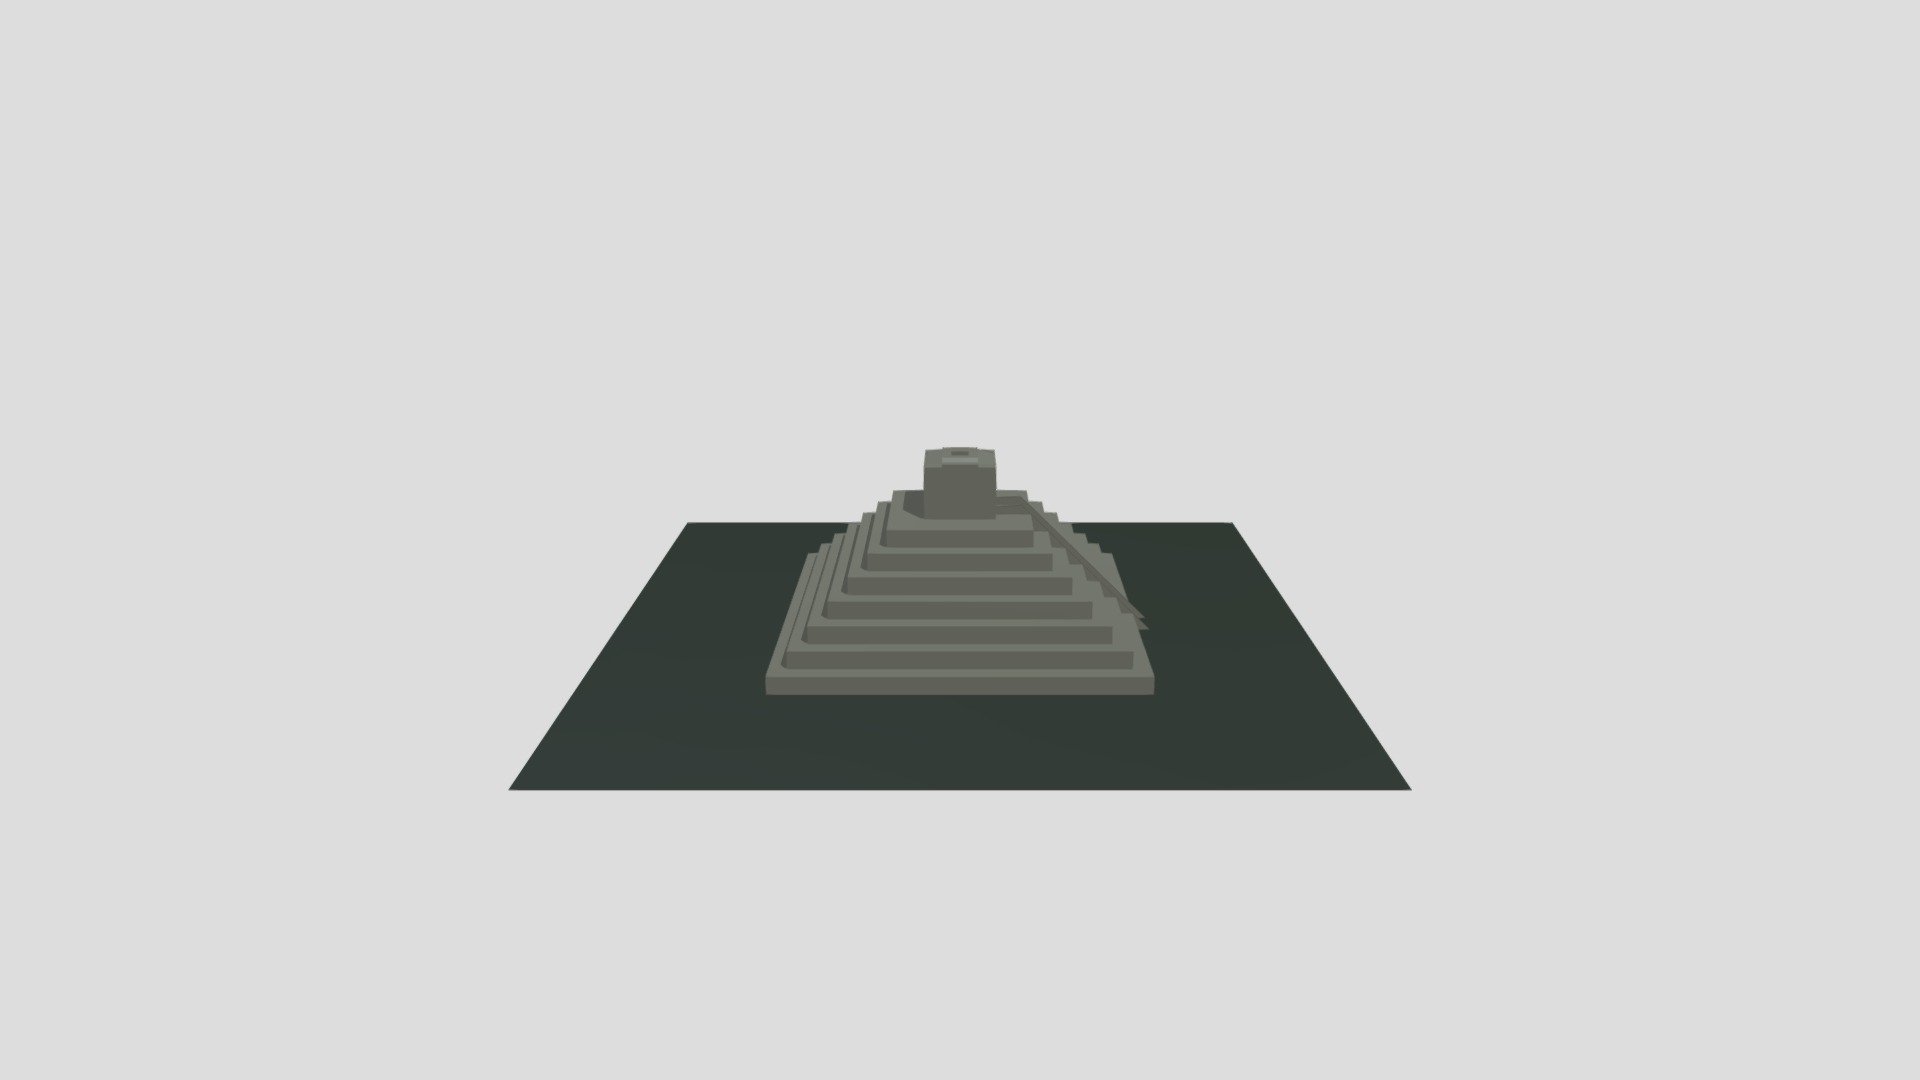 S02C09 update: Mayan Pyramid